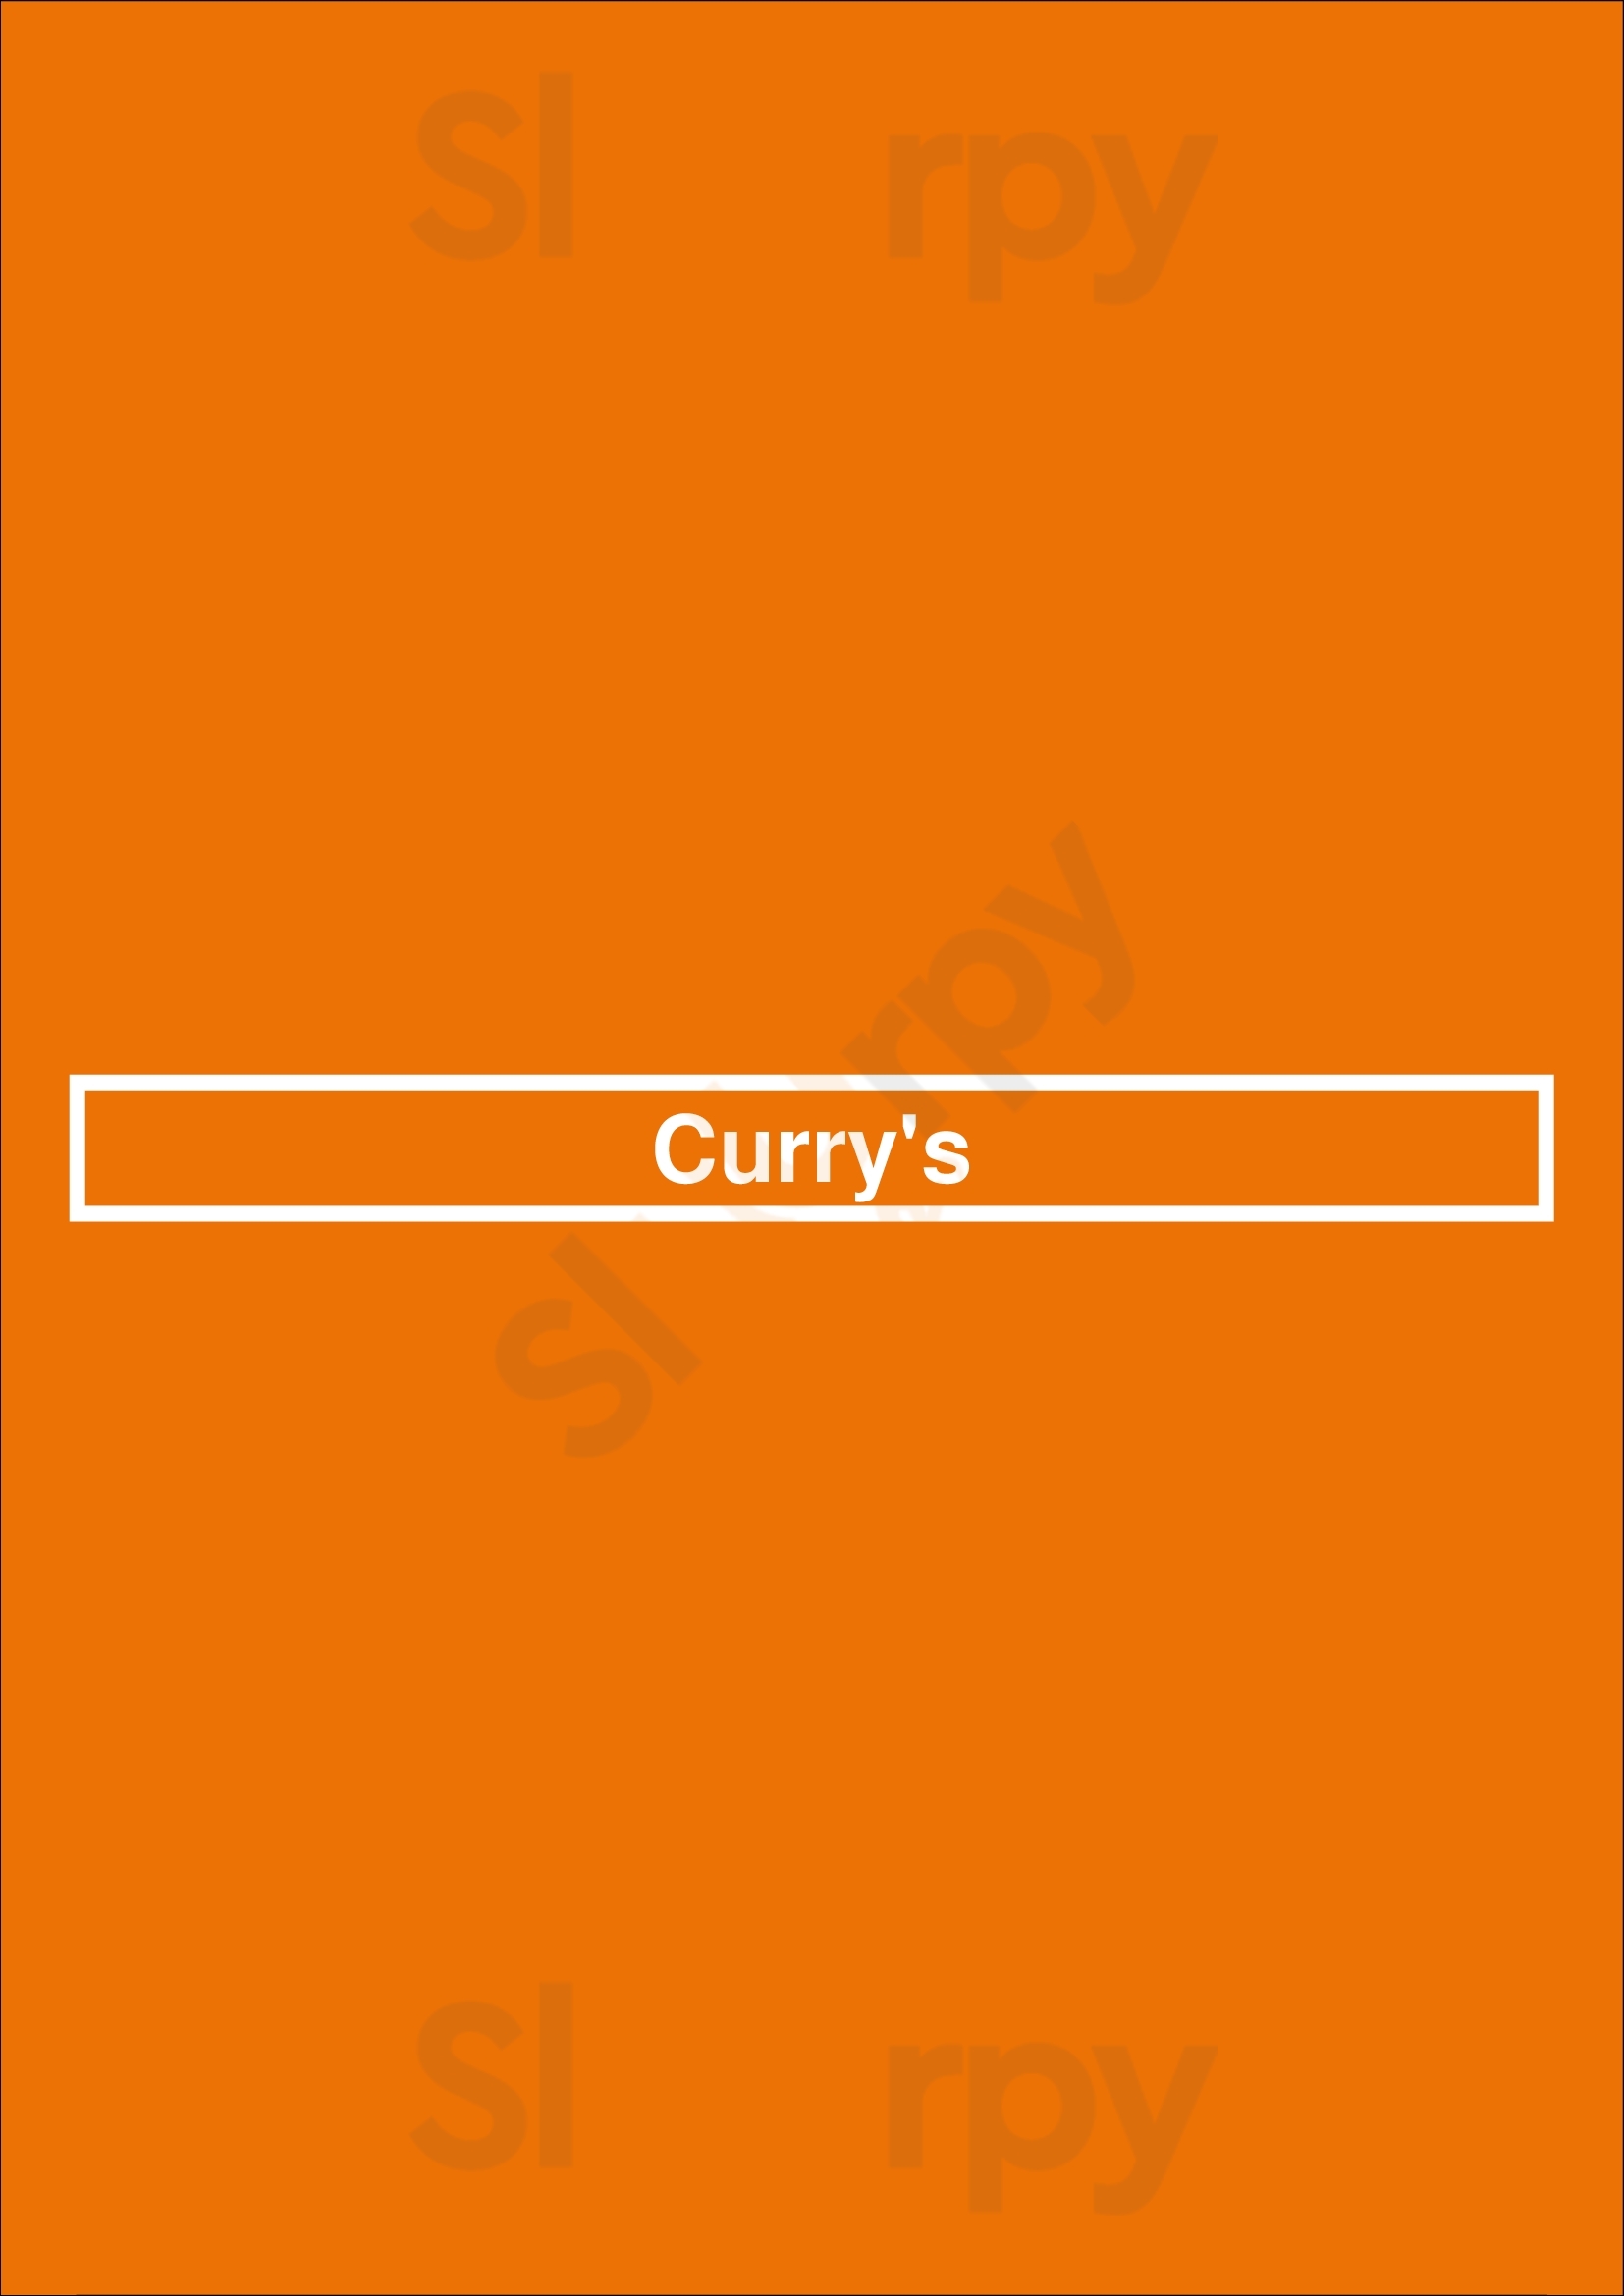 Curry's London Menu - 1